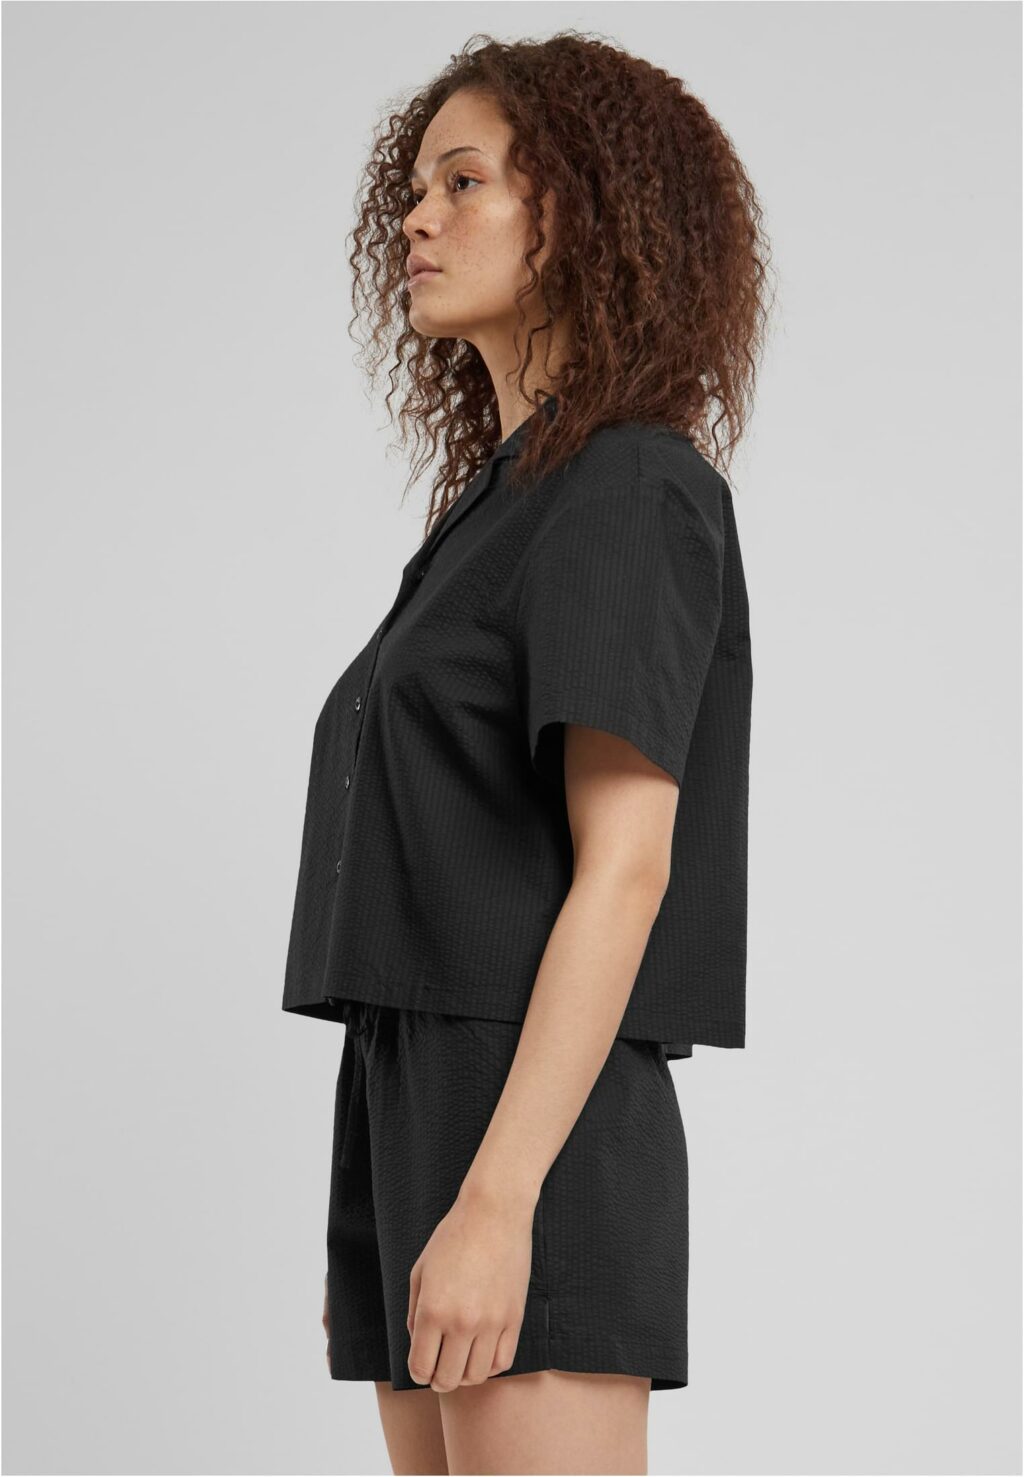 Urban Classics Ladies Seersucker Shirt black TB6181